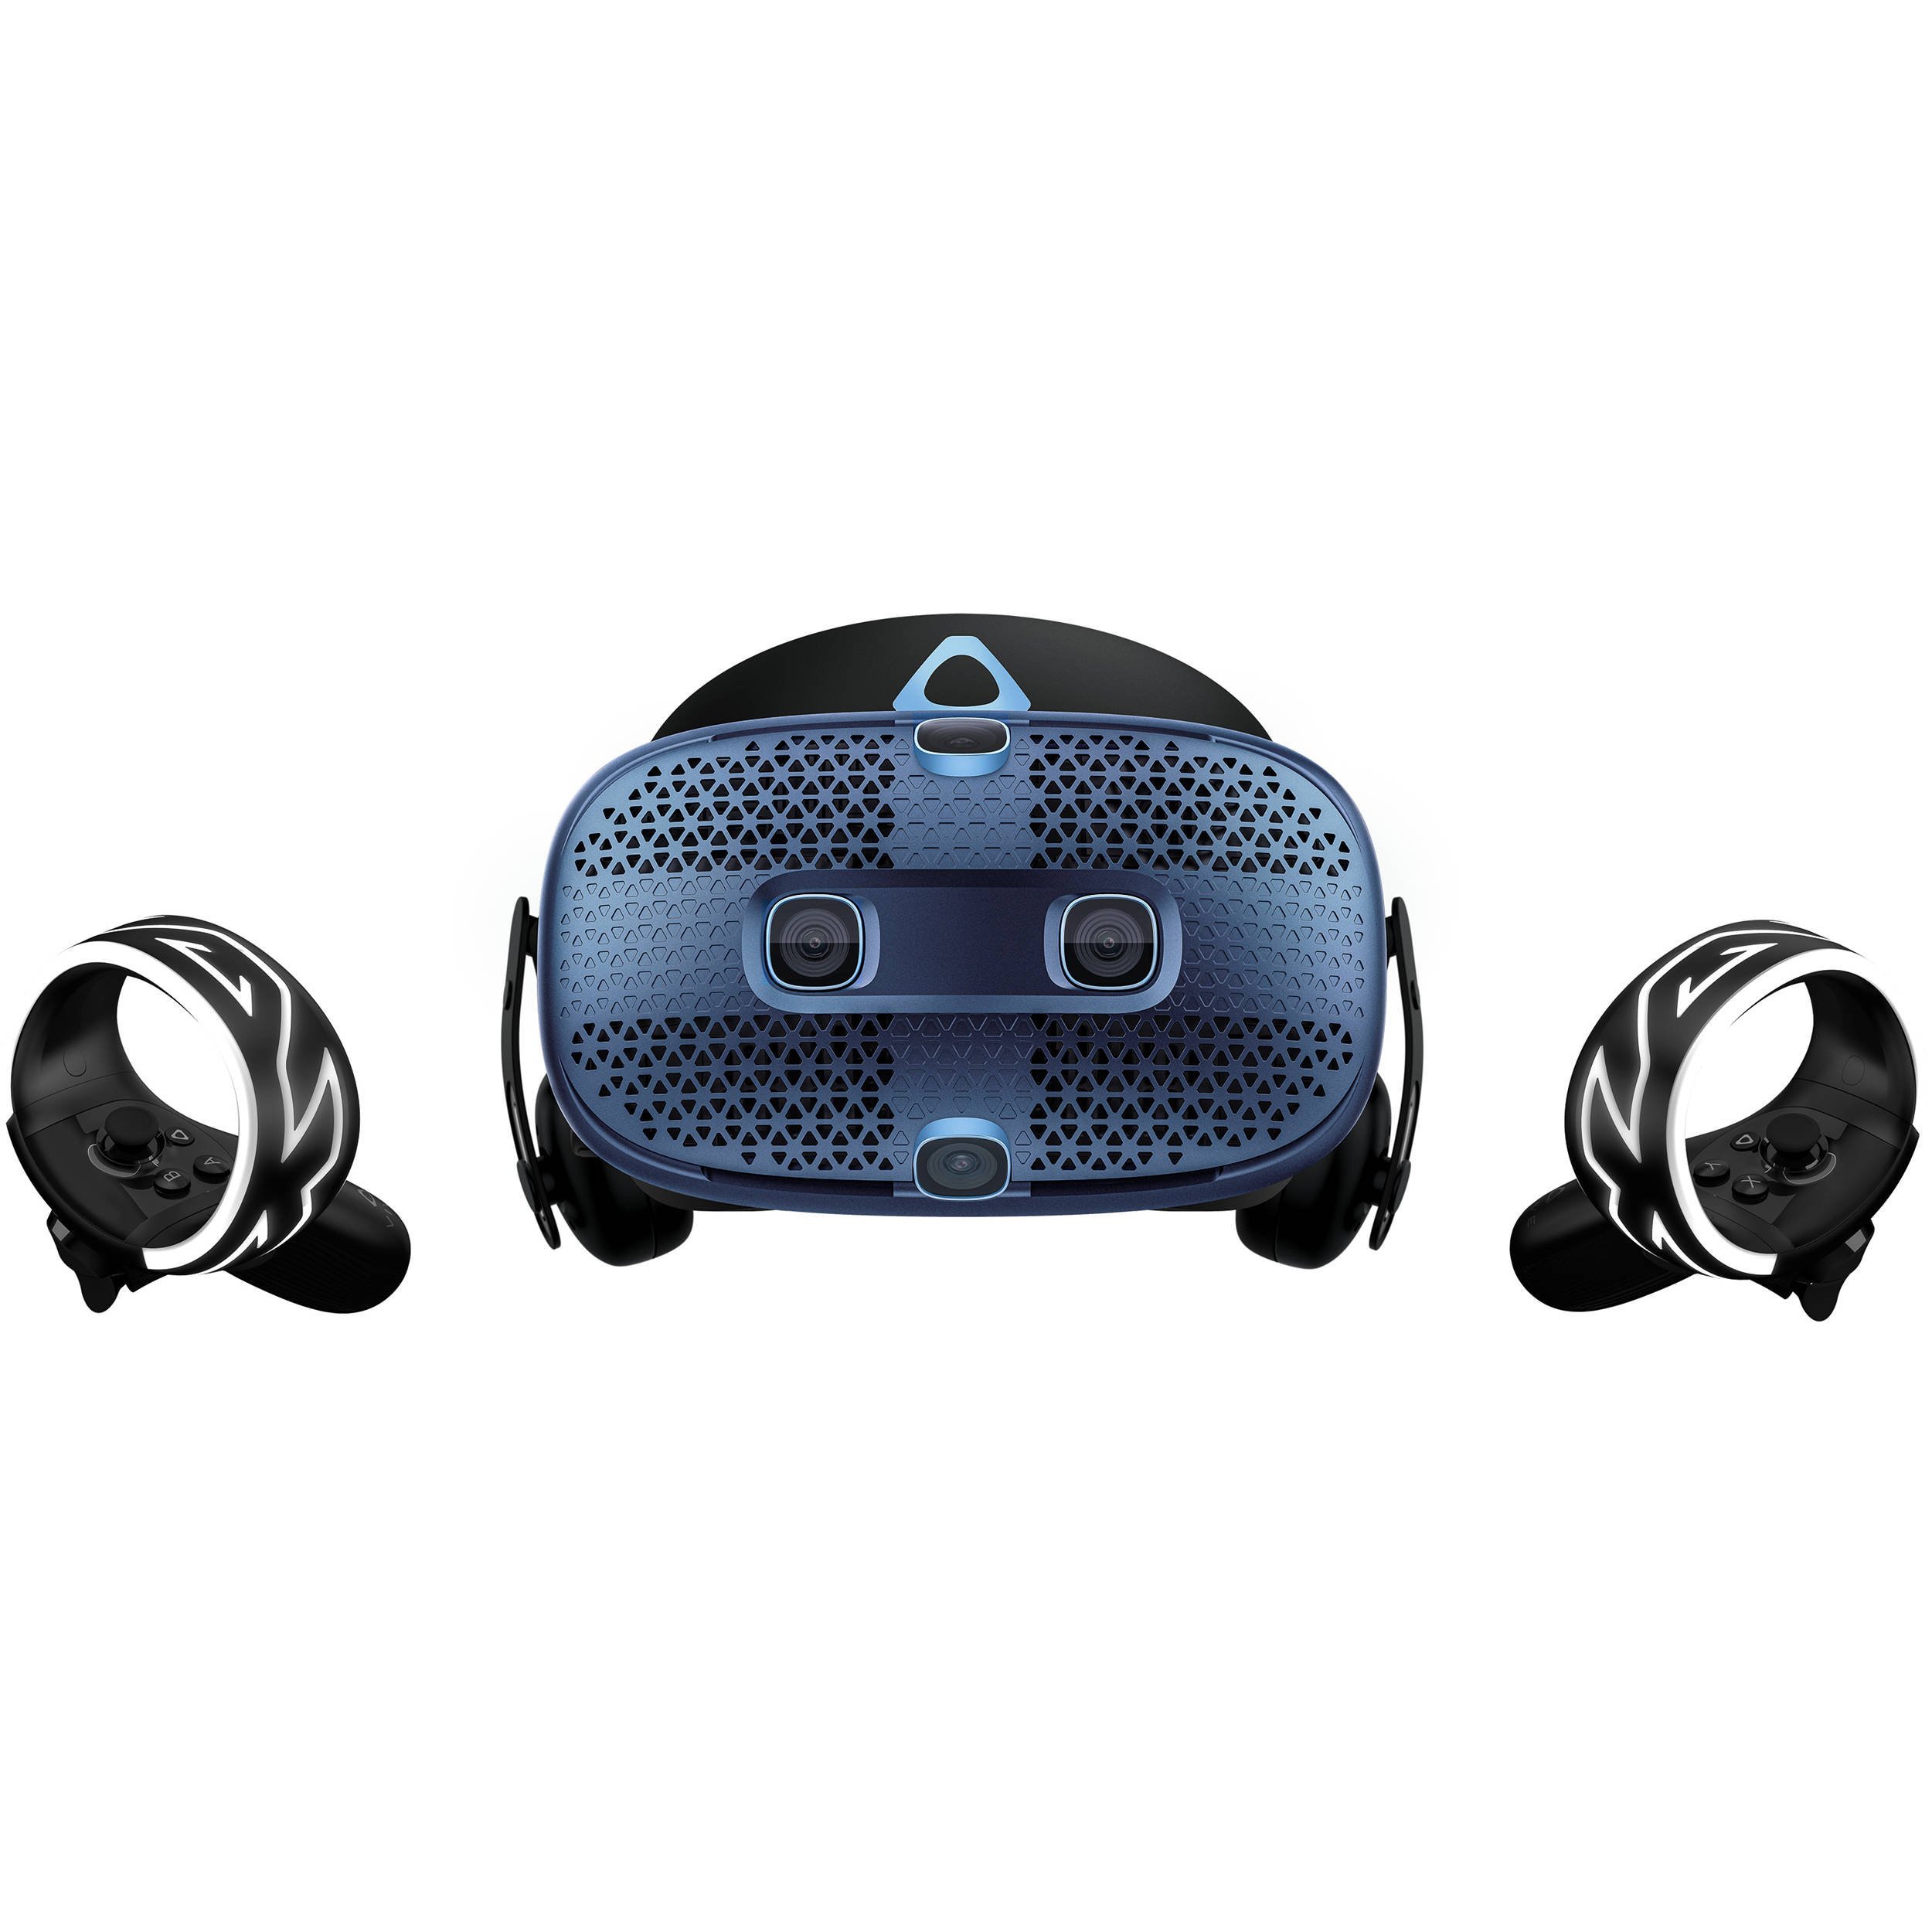 Виртуальная шлем купить для пк. VR очки HTC Vive. ВР очки HTC Vive. VR шлем HTC Viva. Очки виртуальной реальности HTC Vive Cosmos.